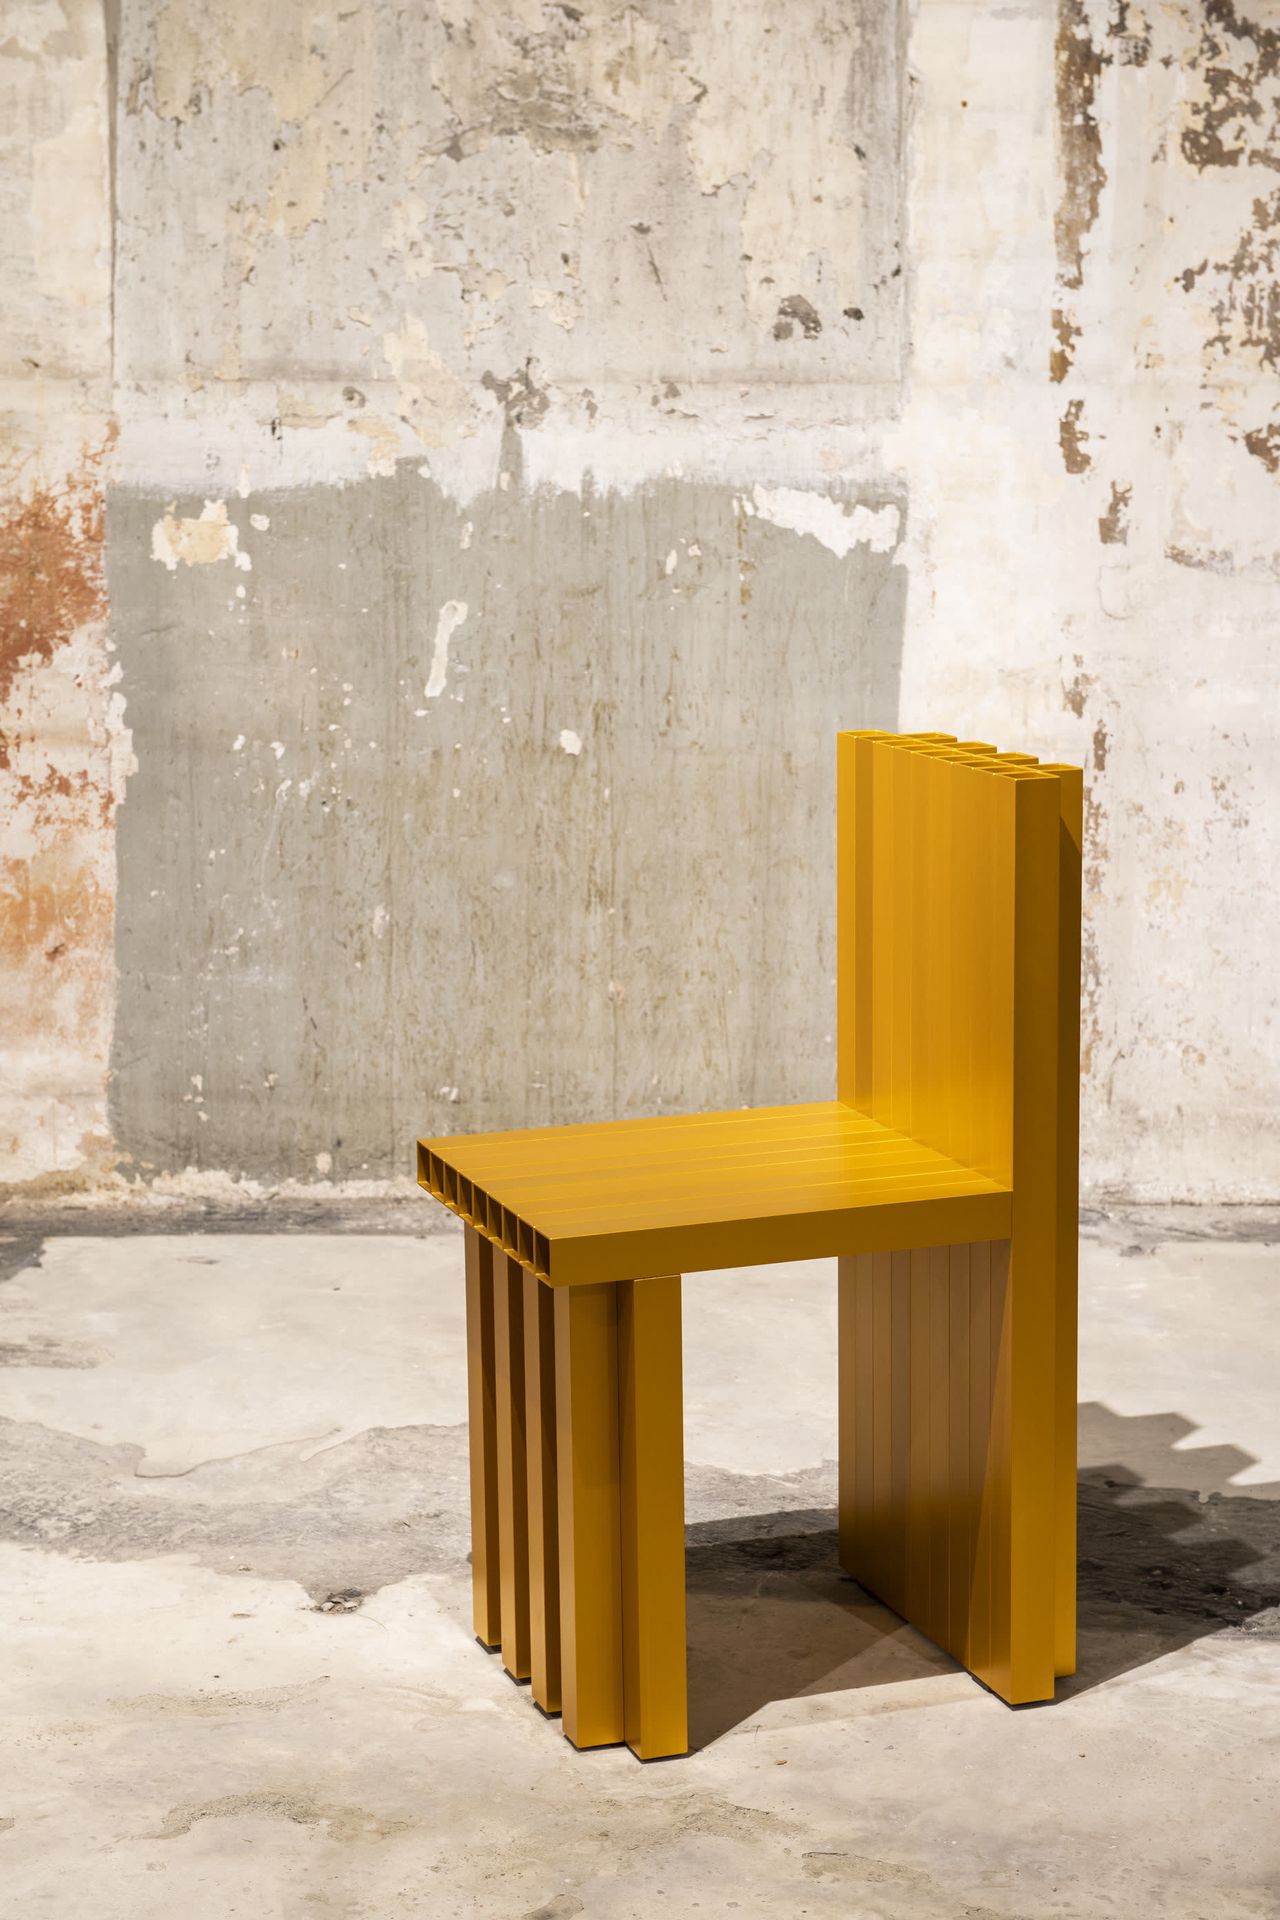 SEUNGHAN BAEK 点线面---椅子
橙色阳极氧化铝
2019
高77宽36深48厘米
出处：Iham画廊